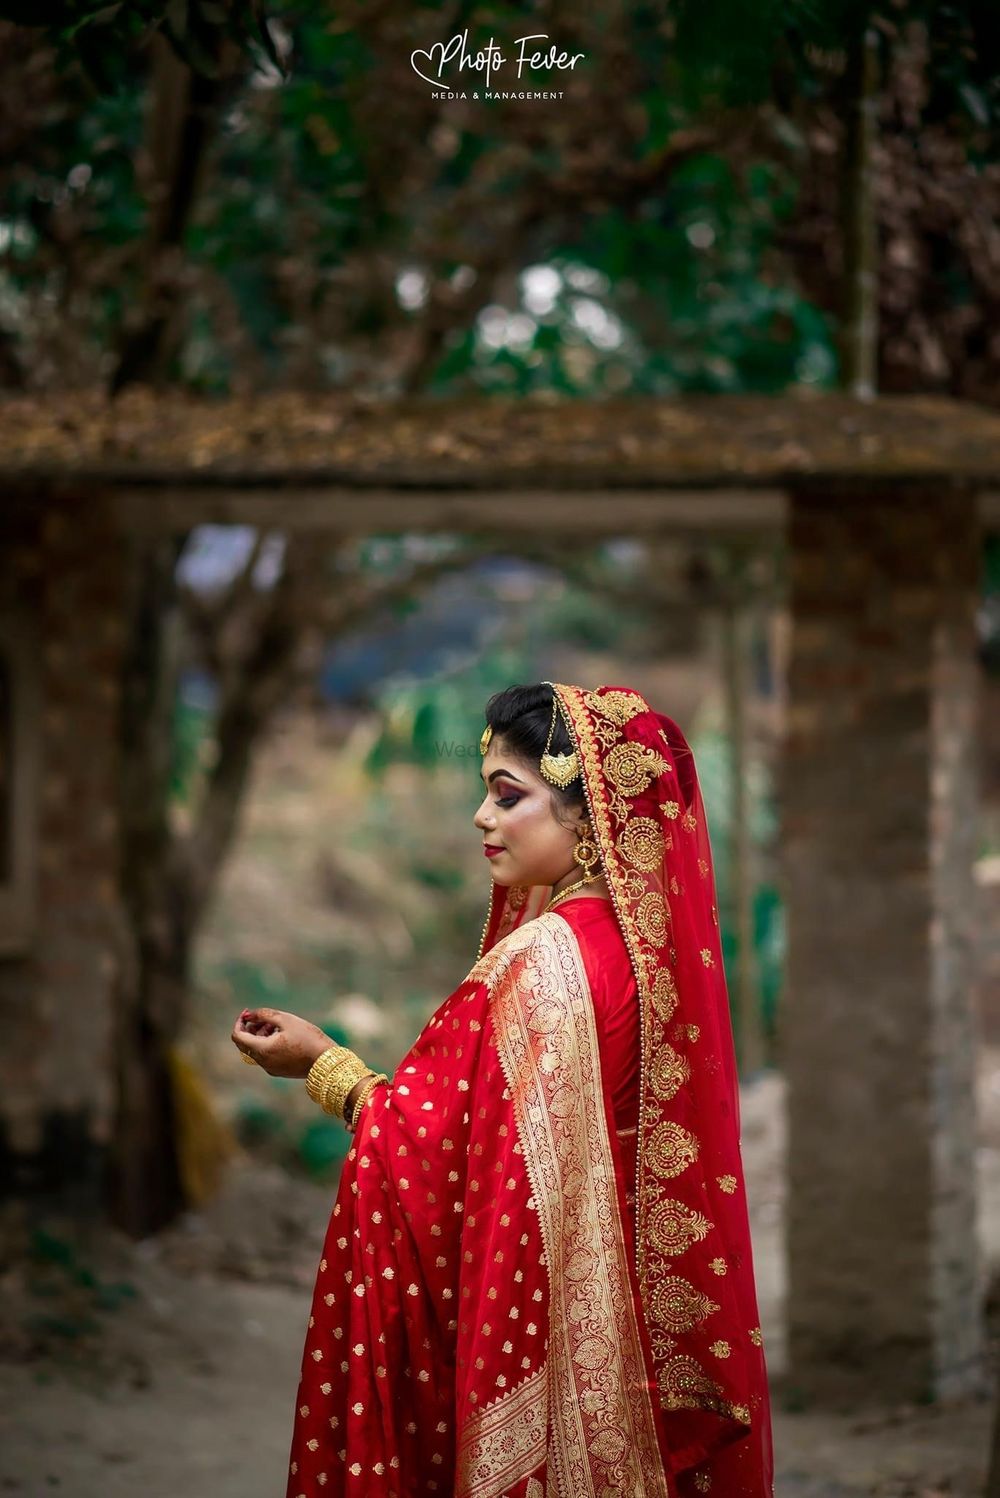 Photo From Iltuza x Rafi Wedding Day - By Photo Fever Media & Management 